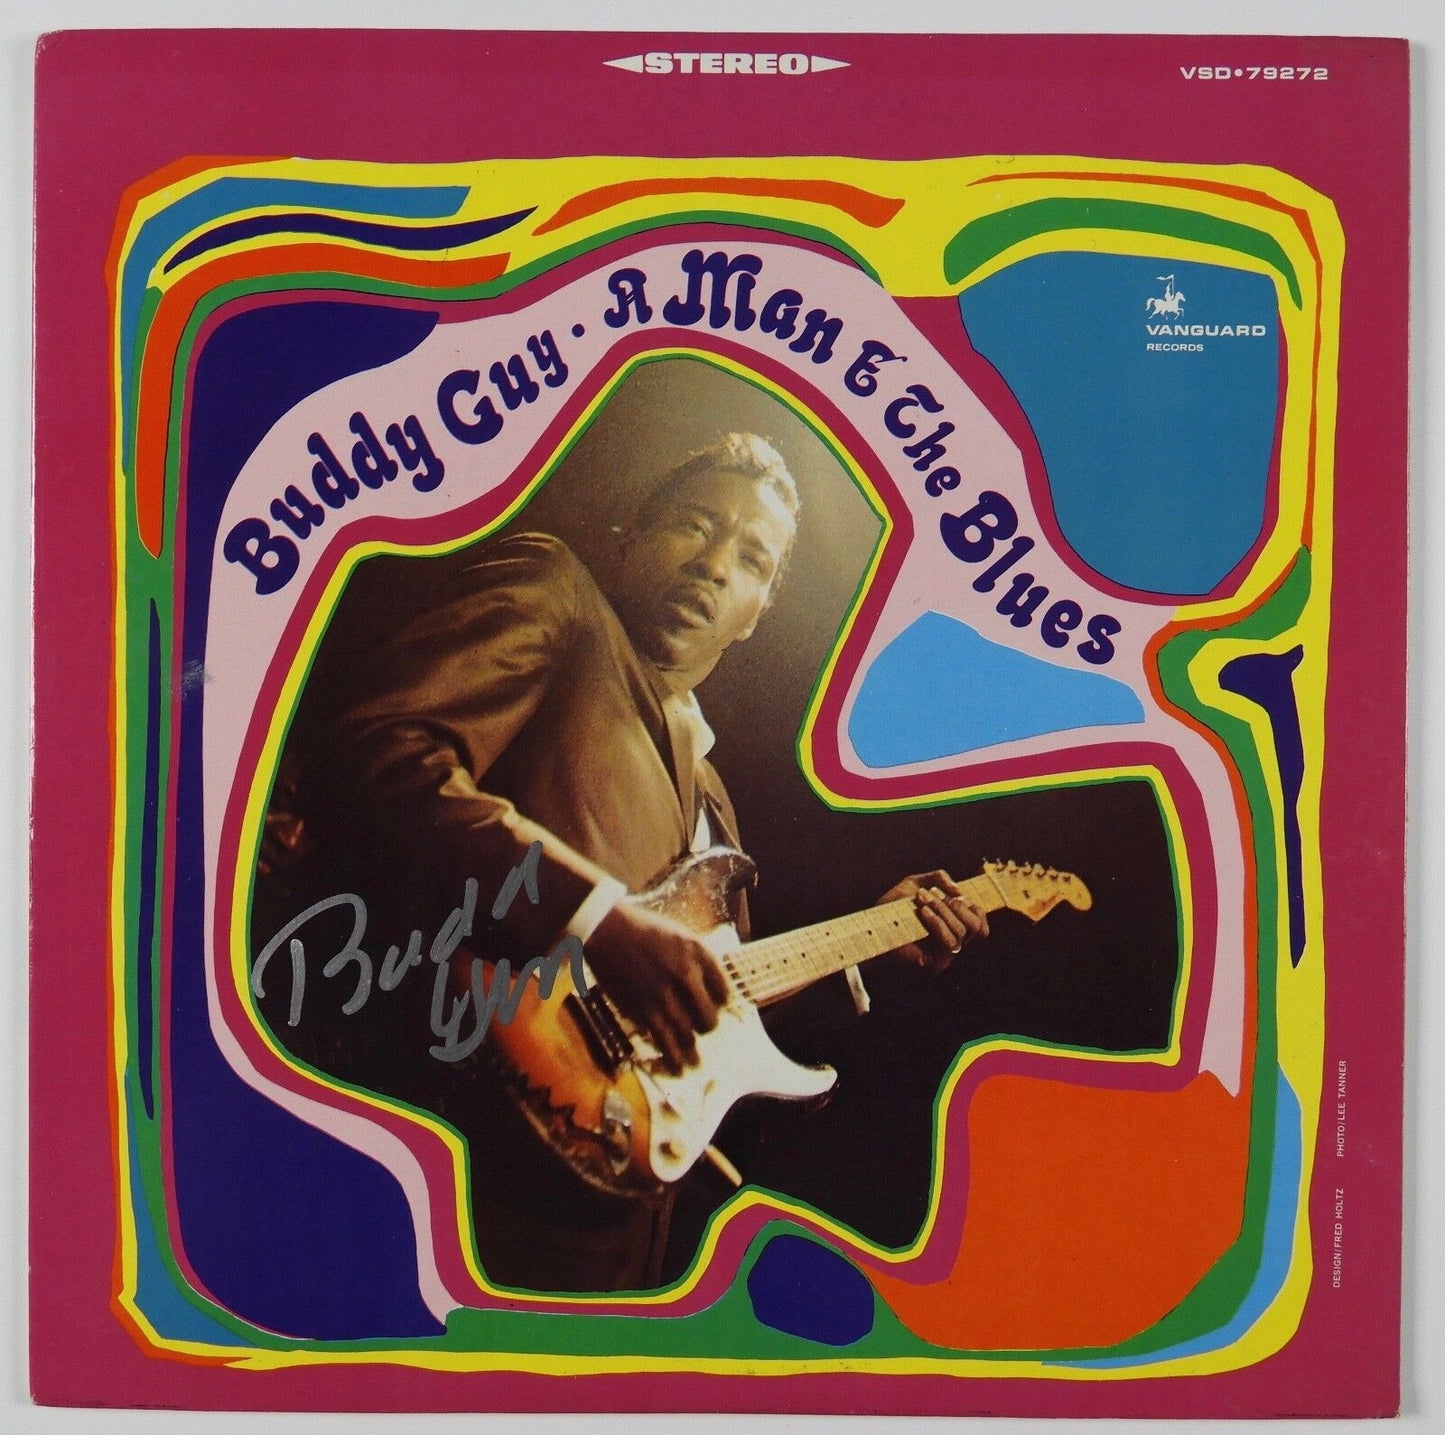 Buddy Guy Signed Autograph JSA A Man & The Blues Vanguard Album LP Vinyl Record